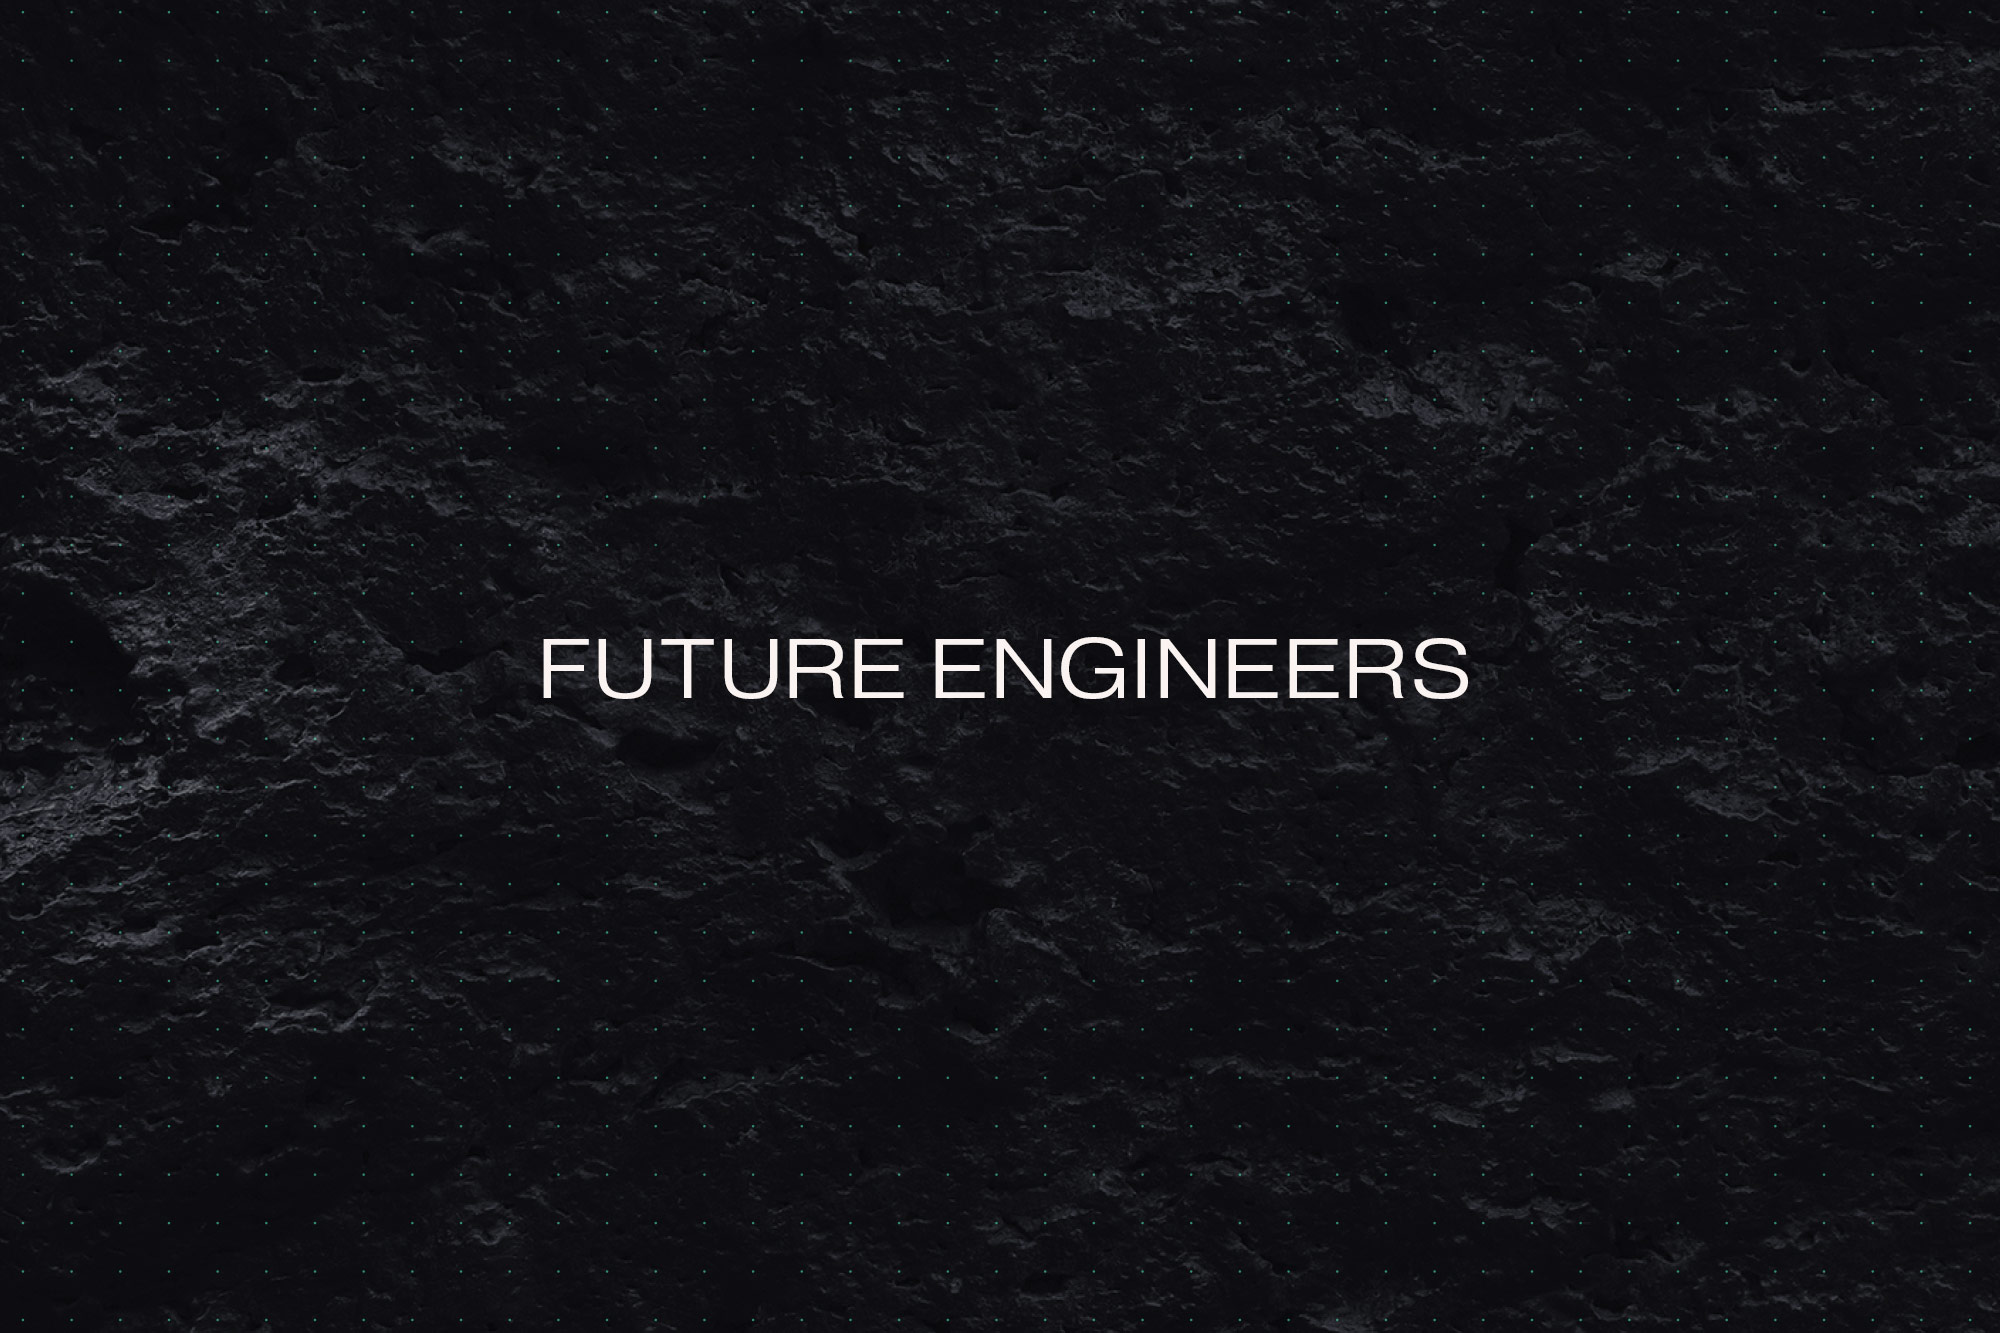 gareth-paul-jones-studio-music-design-future-engineers-branding-cs-03